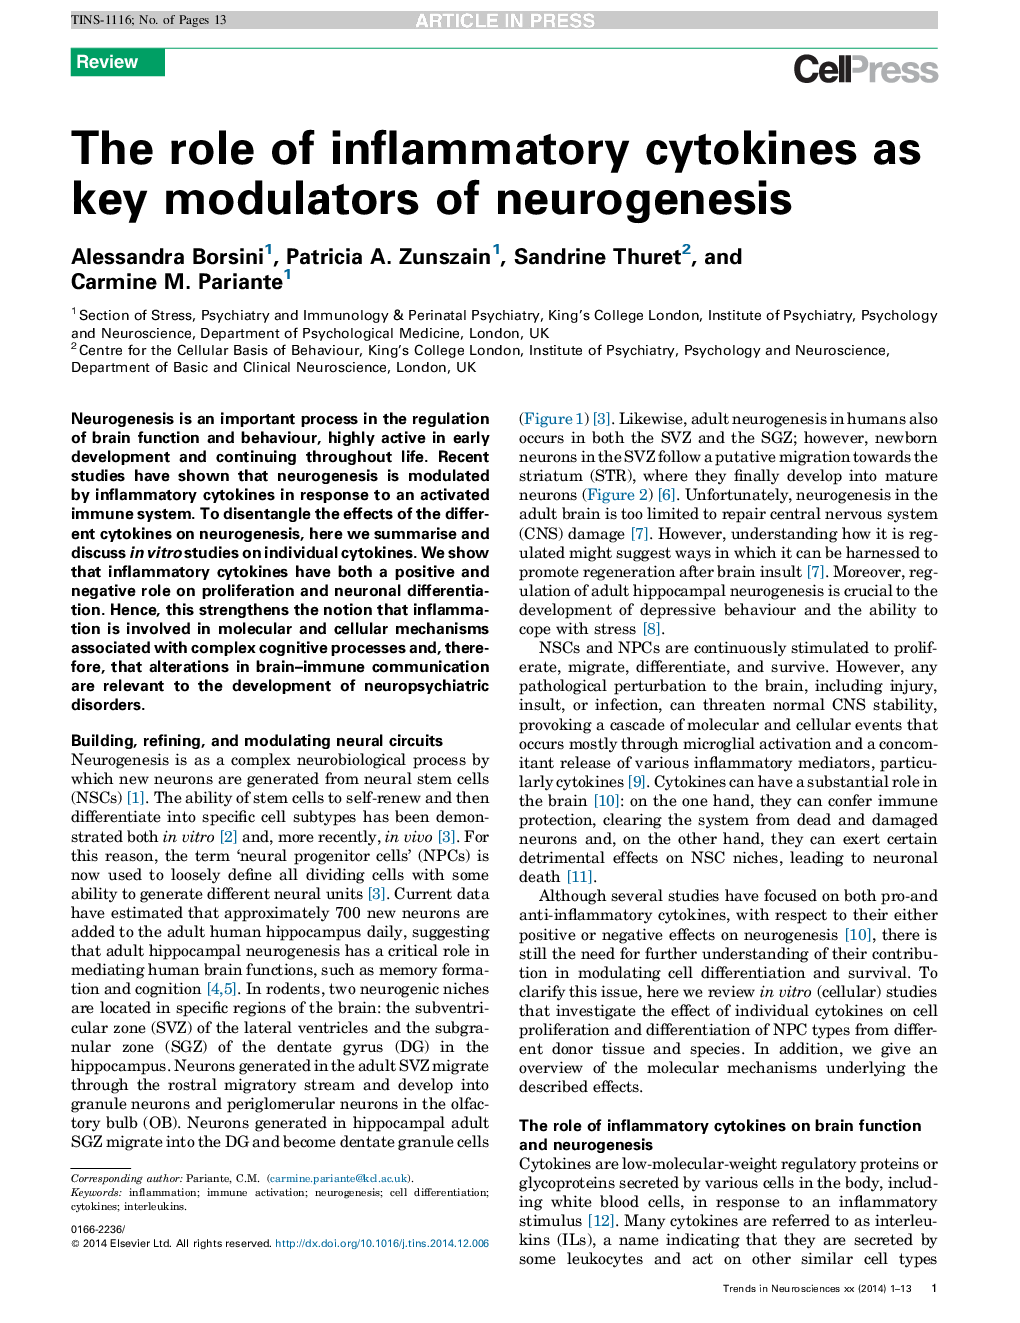 The role of inflammatory cytokines as key modulators of neurogenesis